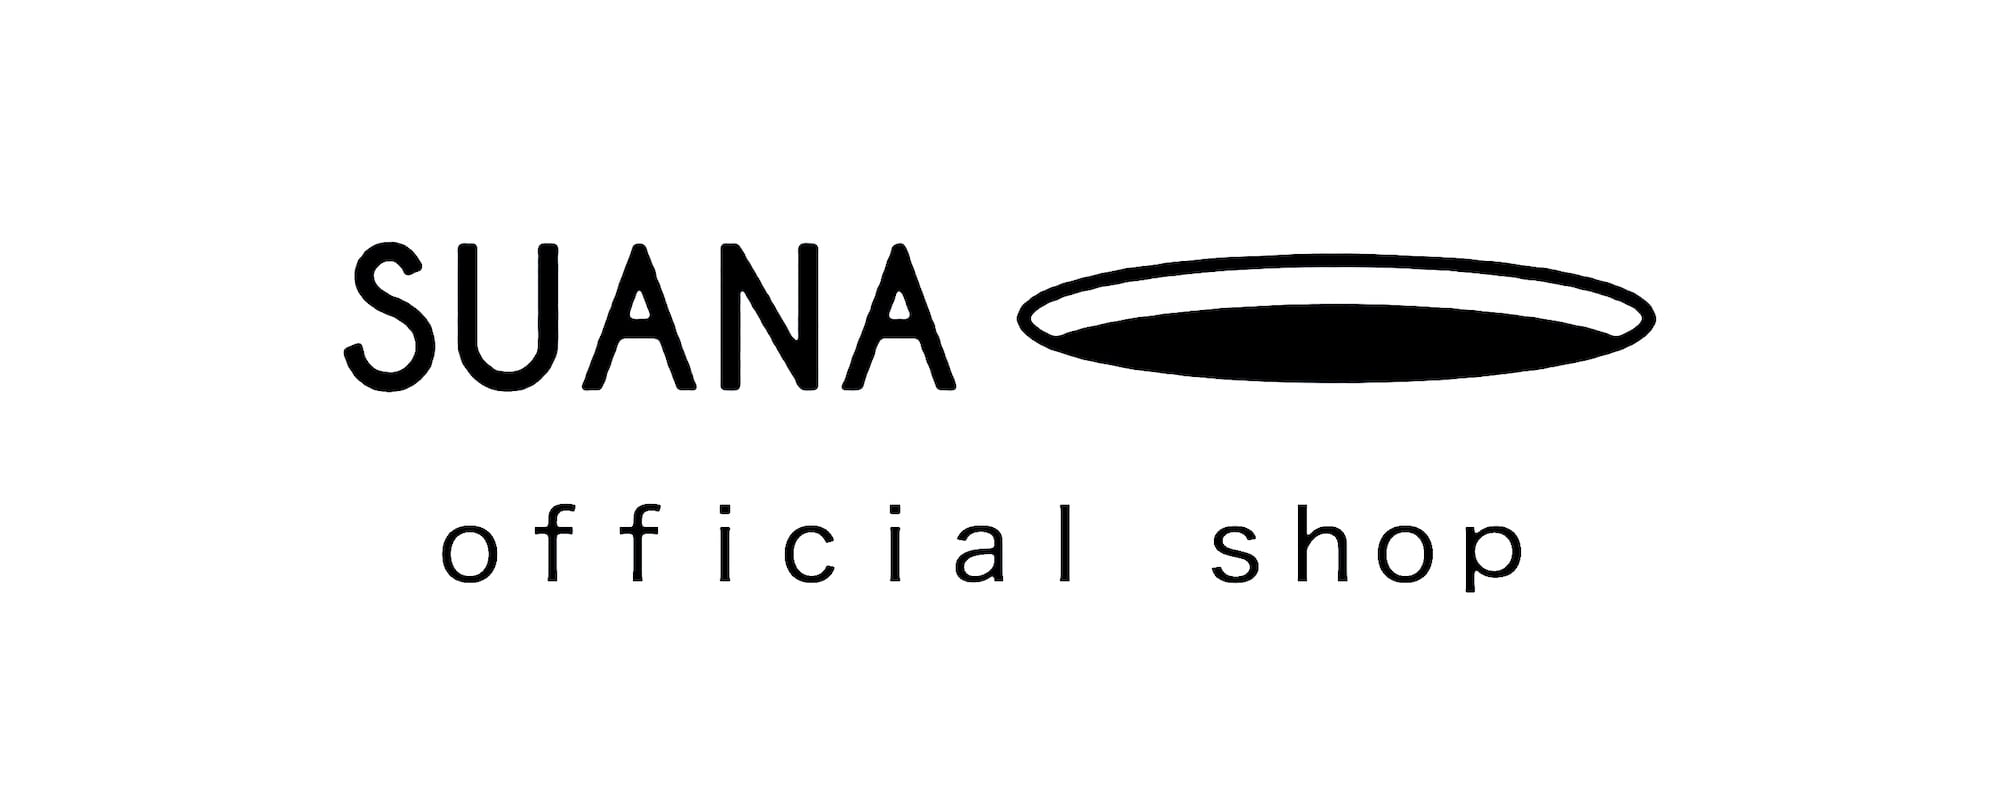 SUANA official shop